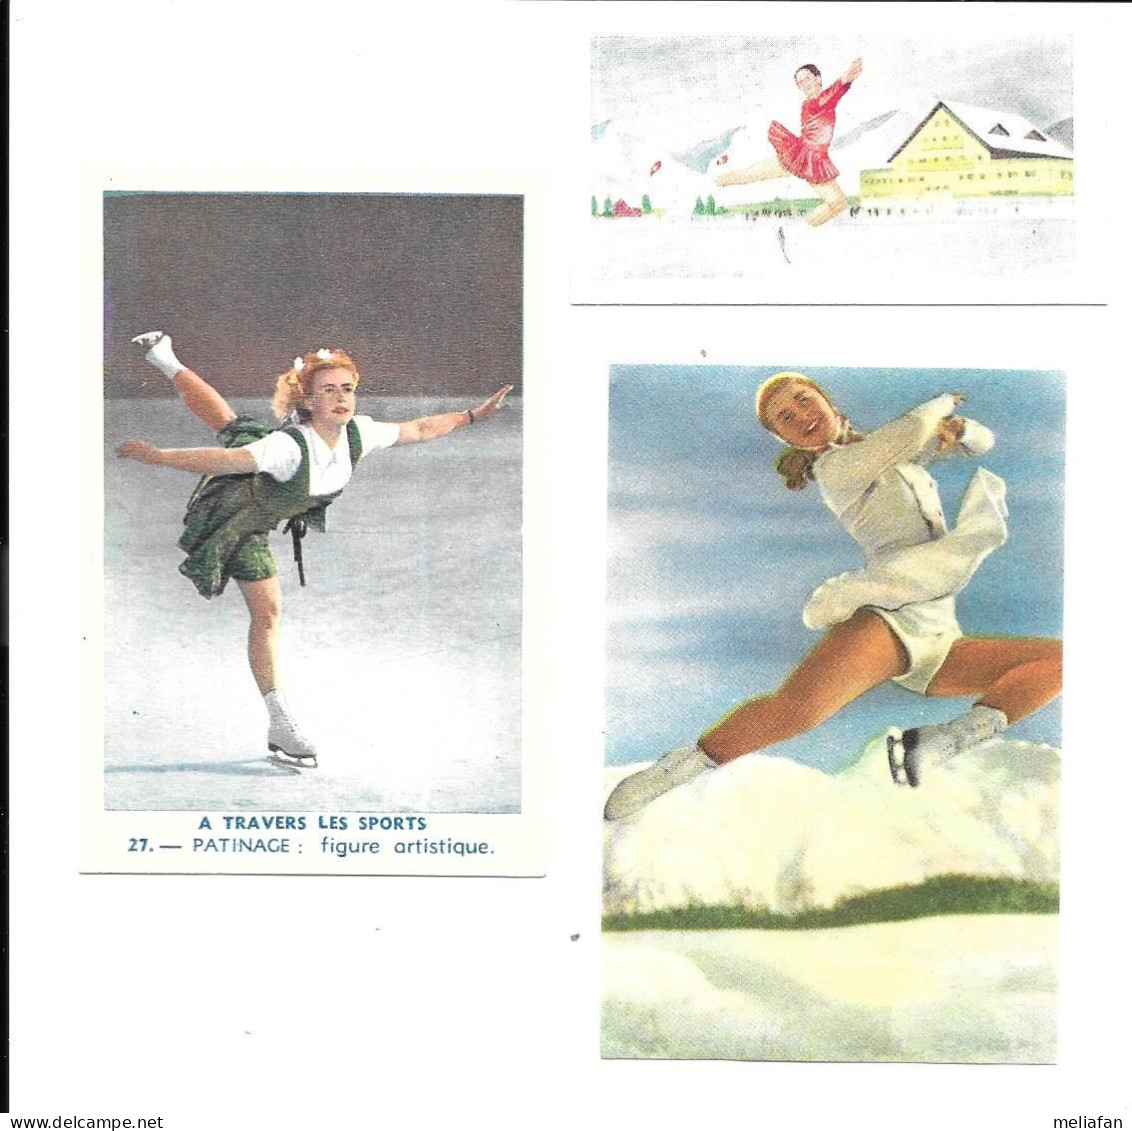 CY43 - IMAGES DIVERSES PATINAGE ARTISTIQUE - BARBARA ANN SCOTT  (droite) - Eiskunstlauf